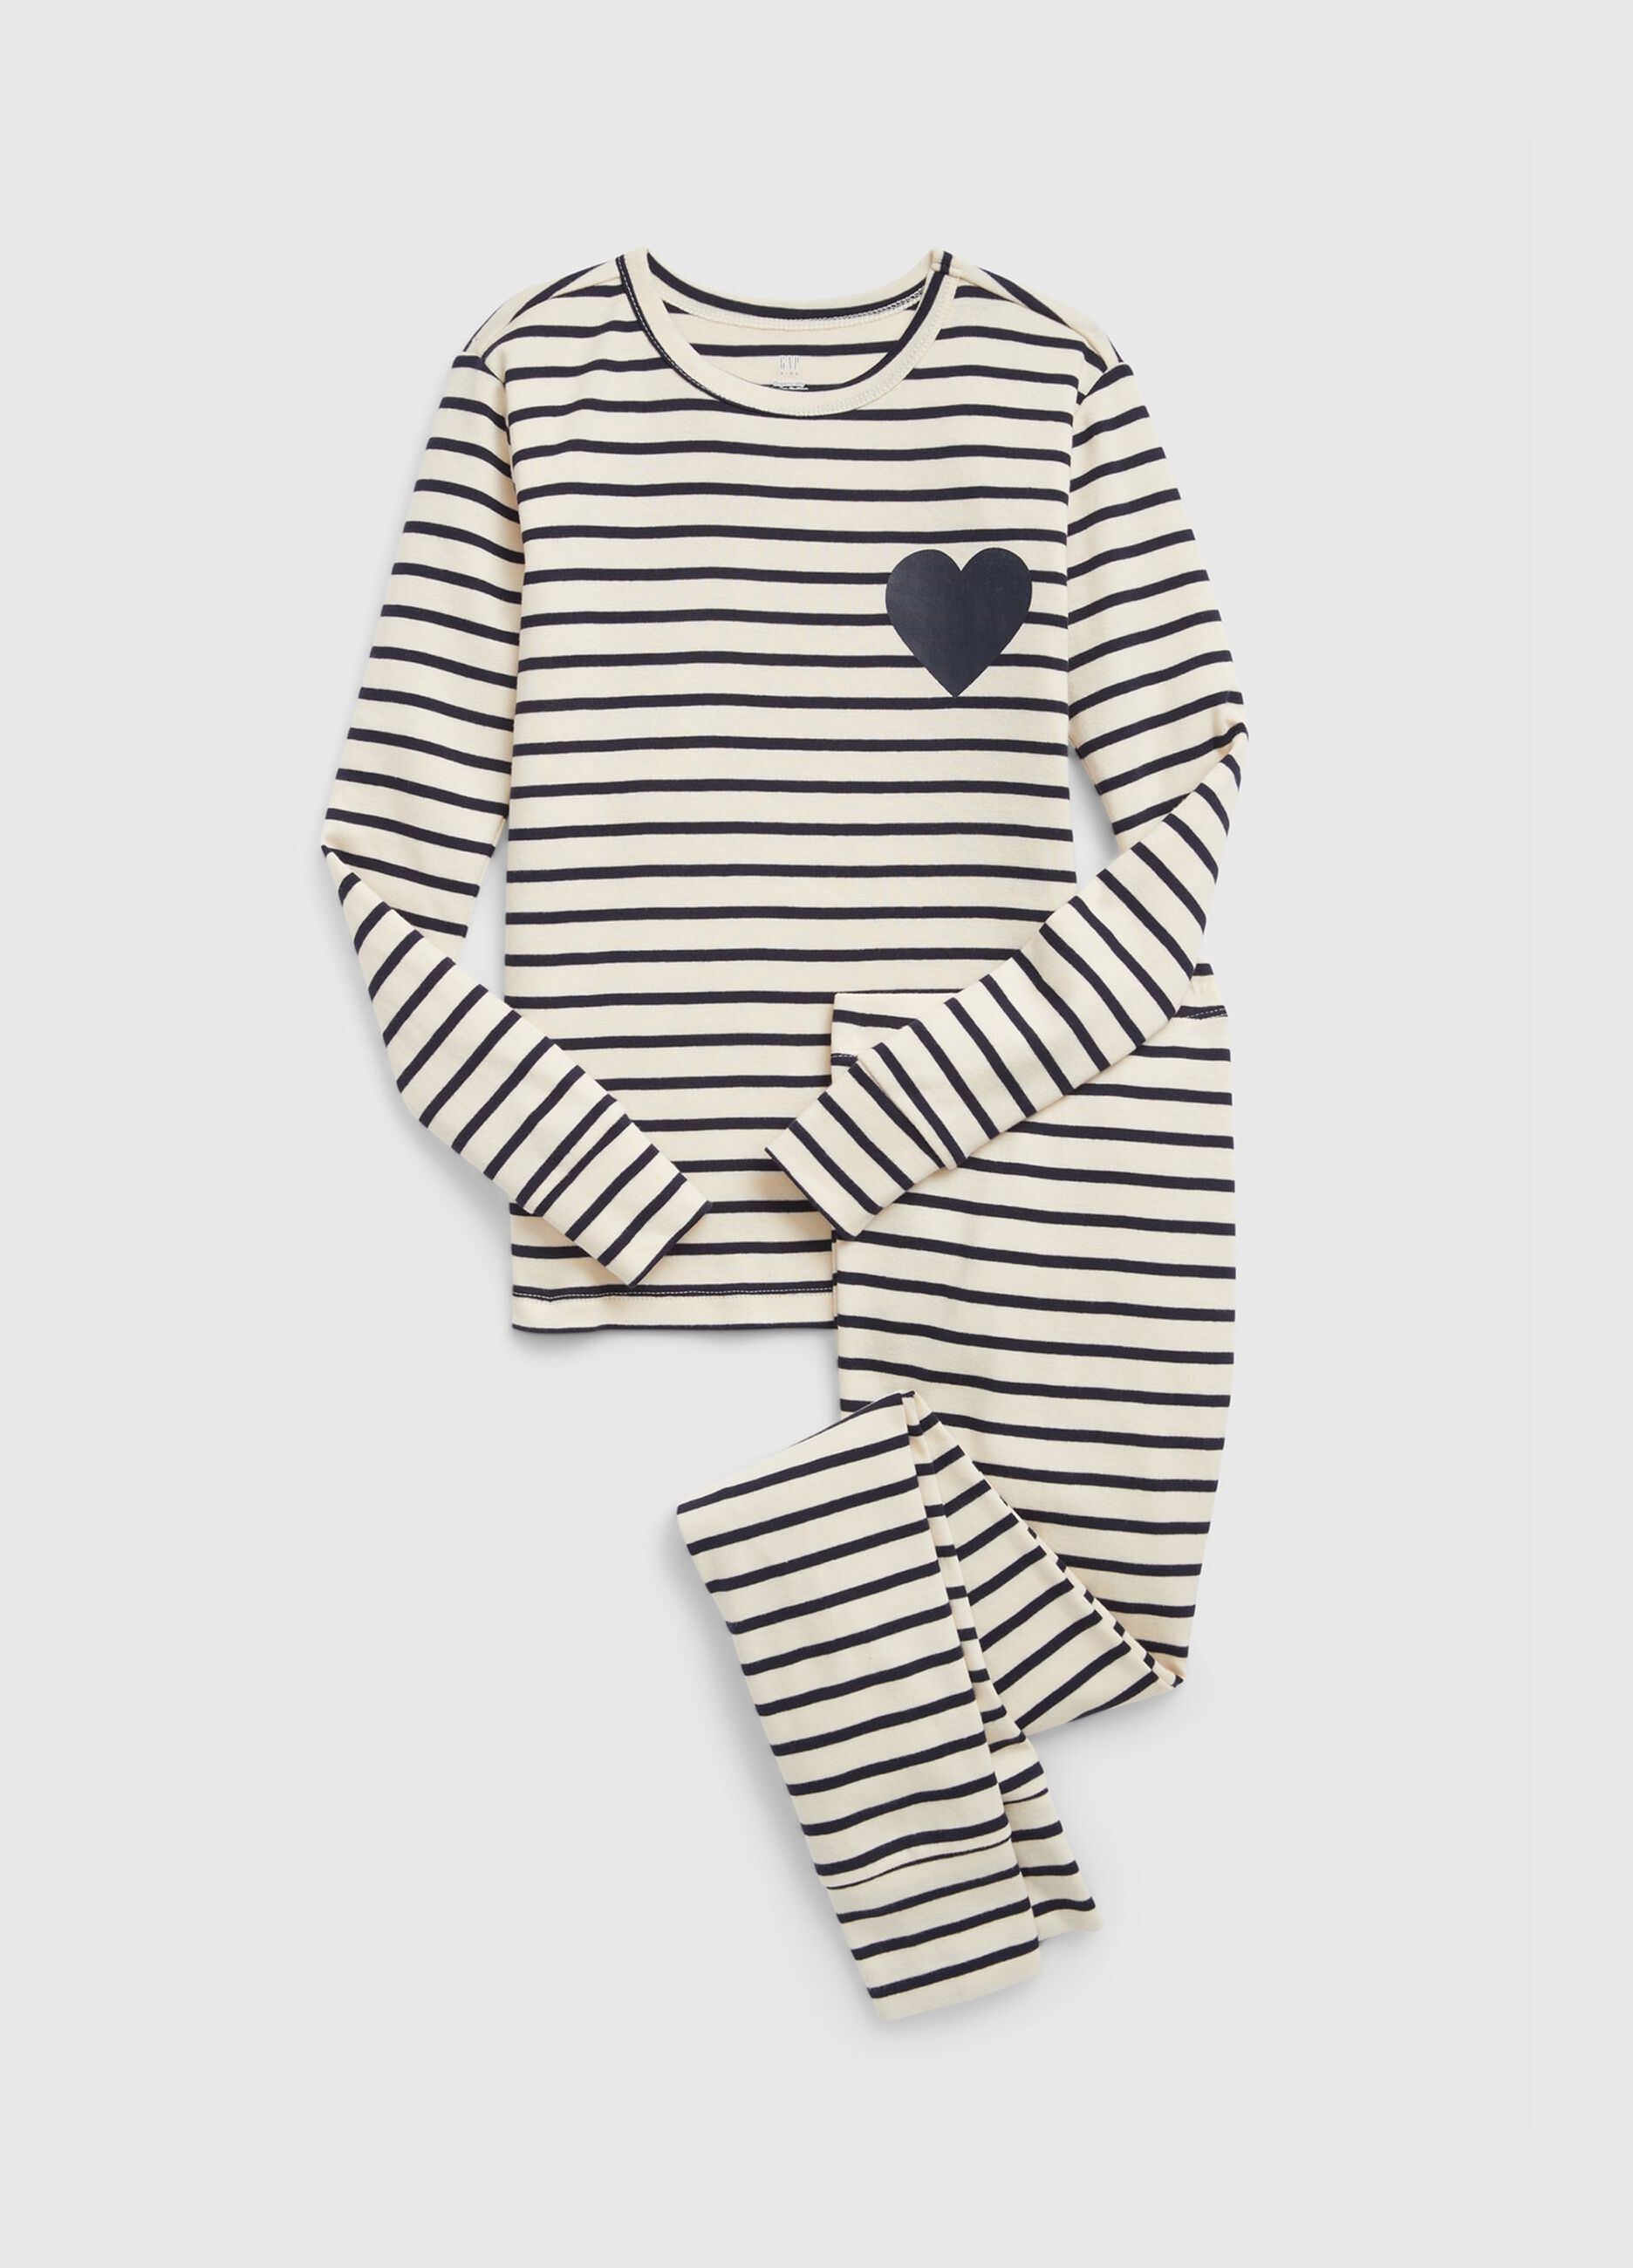 Full-length striped pyjamas with hearts print